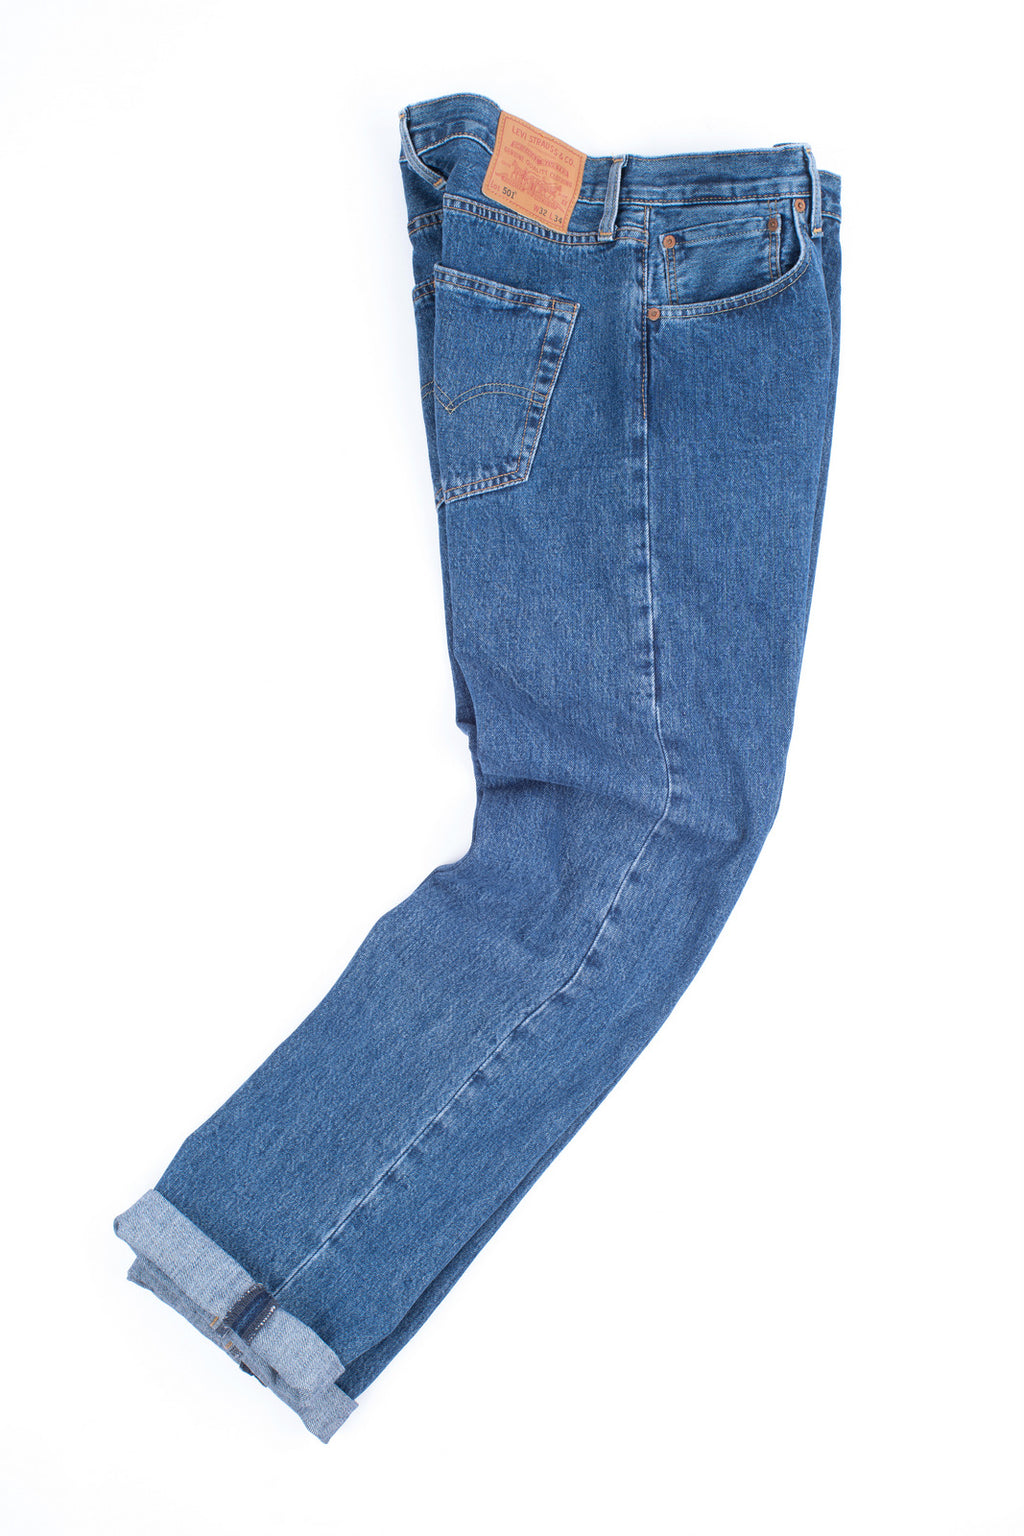 Levi's 501 Big E Blue Repro Jeans, 32/34